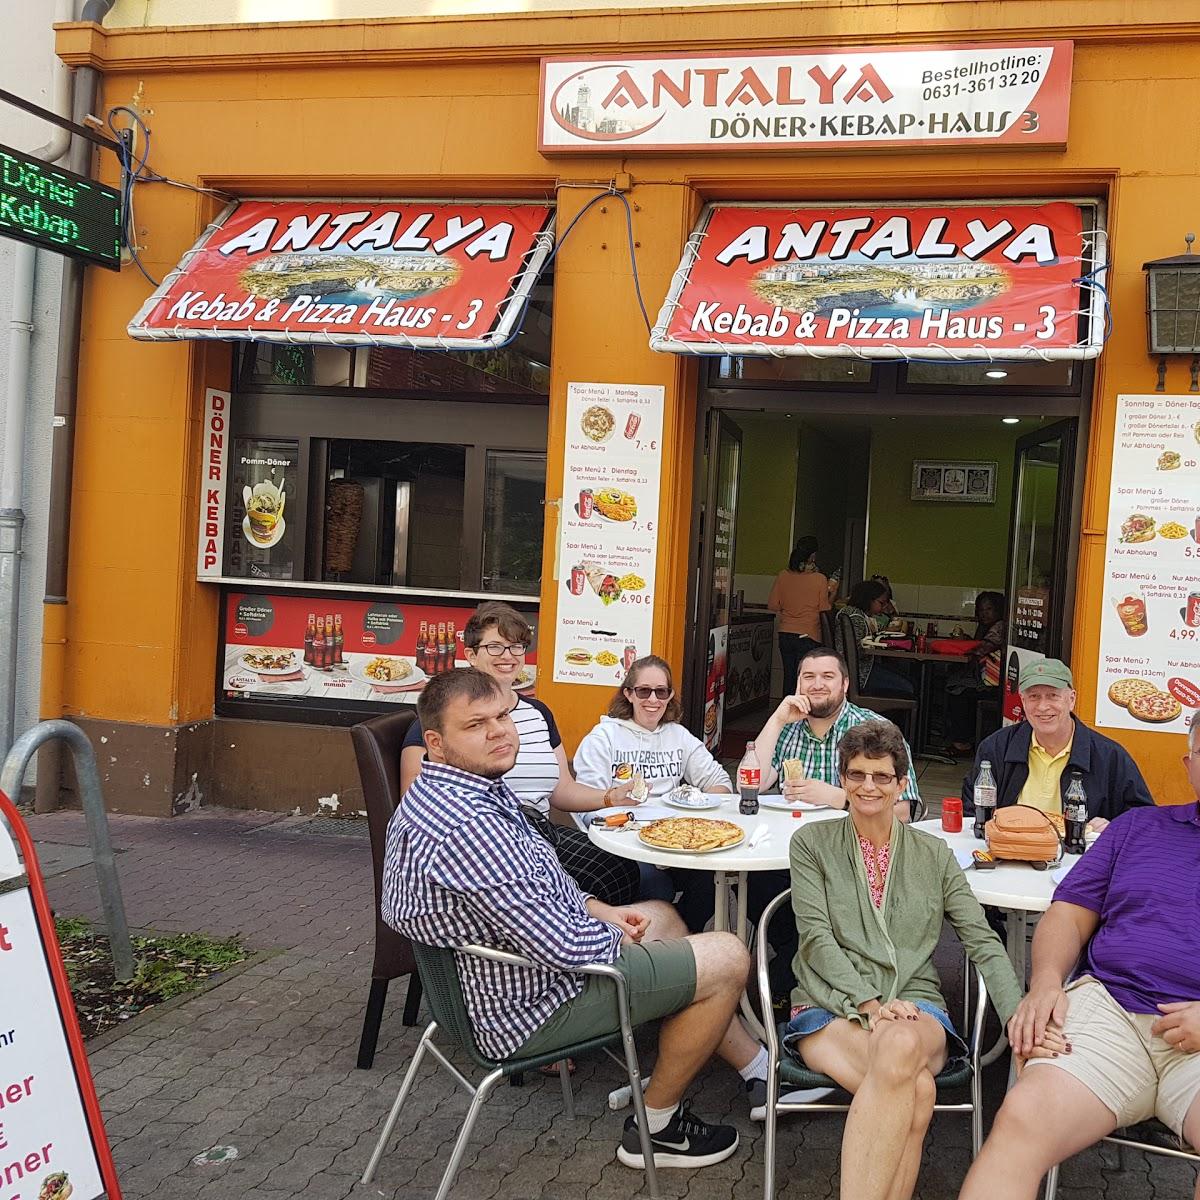 Restaurant "Antalya Kebab-Haus" in Kaiserslautern